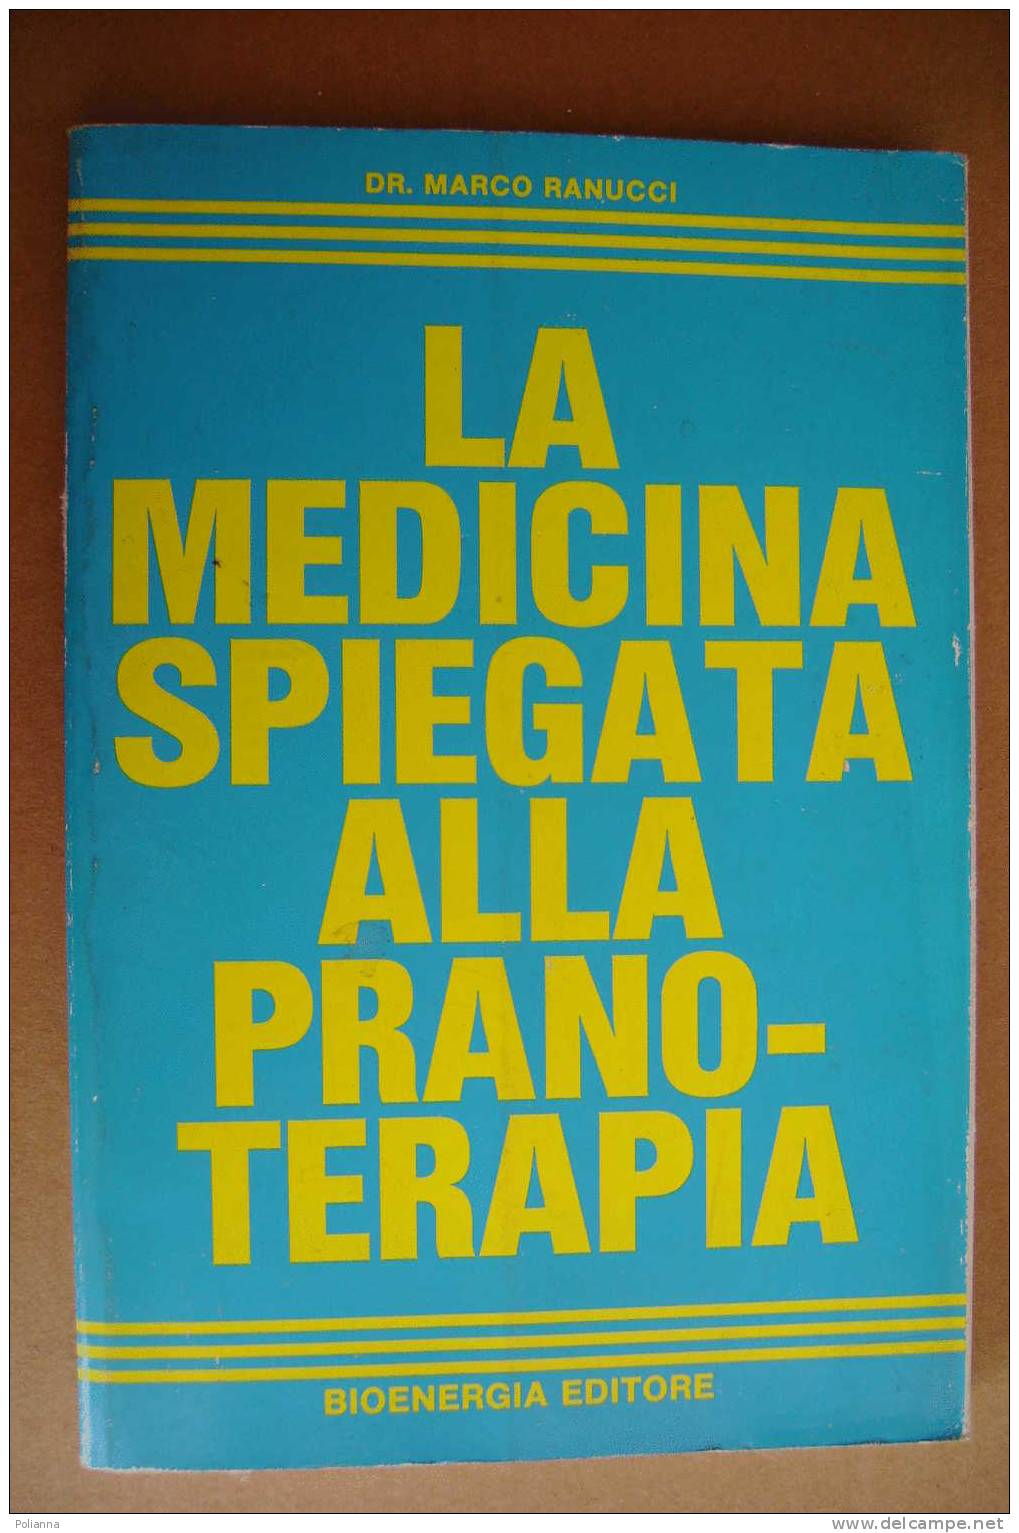 PAO/32 Dr.Marco Ranucci LA MEDICINA SPIEGATA ALLA PRANOTERAPIA Bioenergia Edit. 1985 - Medecine, Psychology